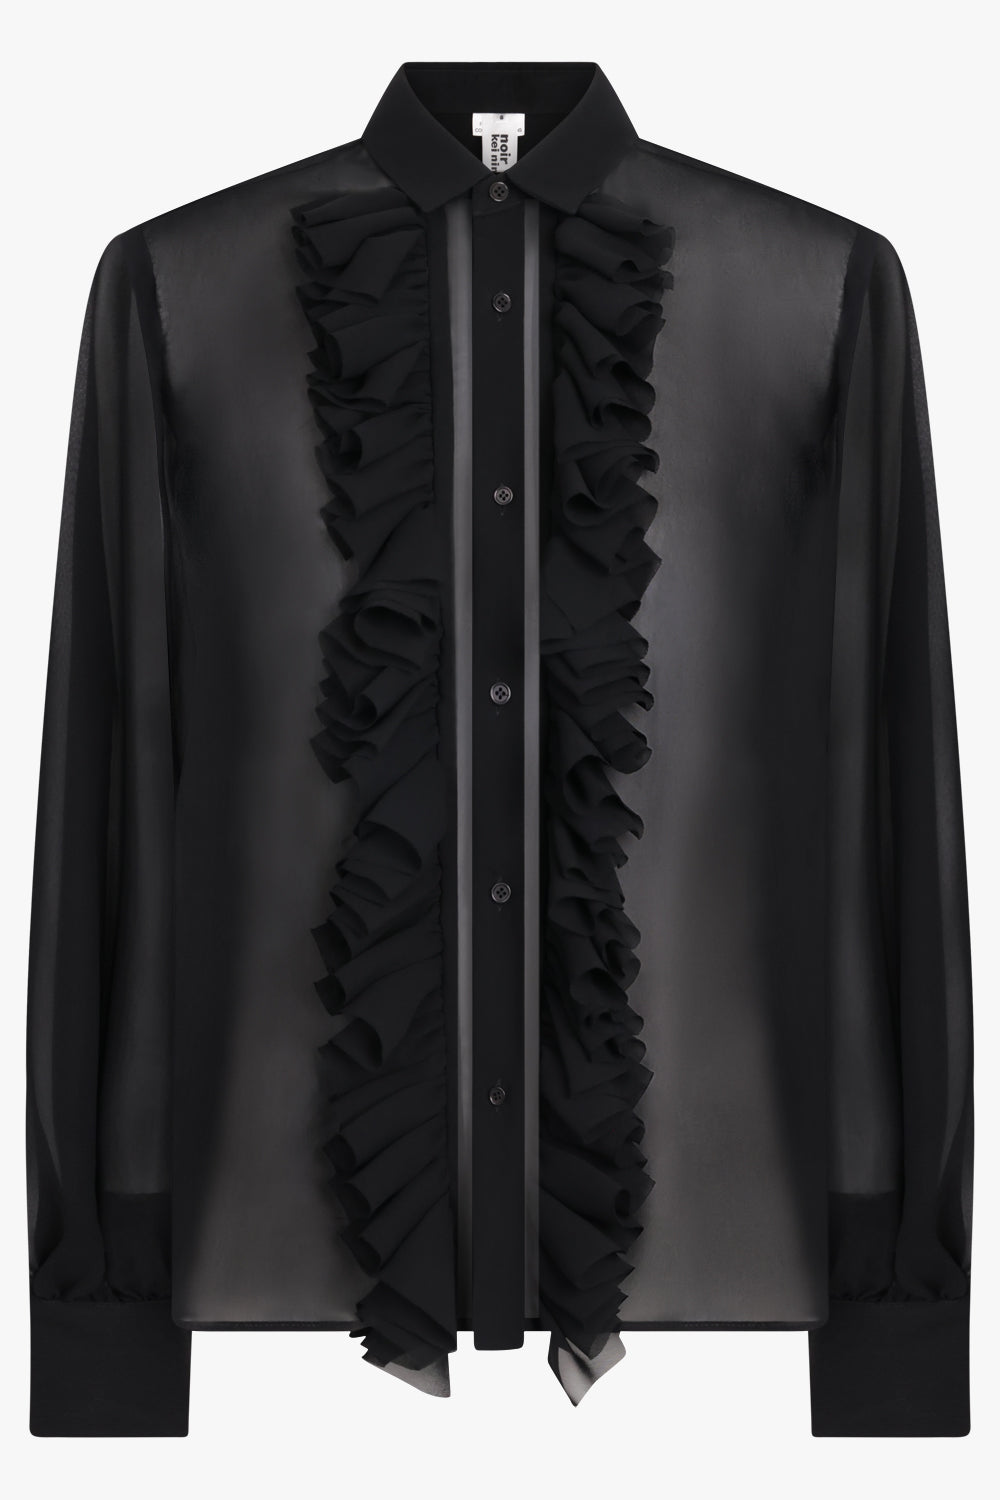 NOIR KEI NINOMIYA RTW Sheer Ruffle Detail L/S Shirt | Black